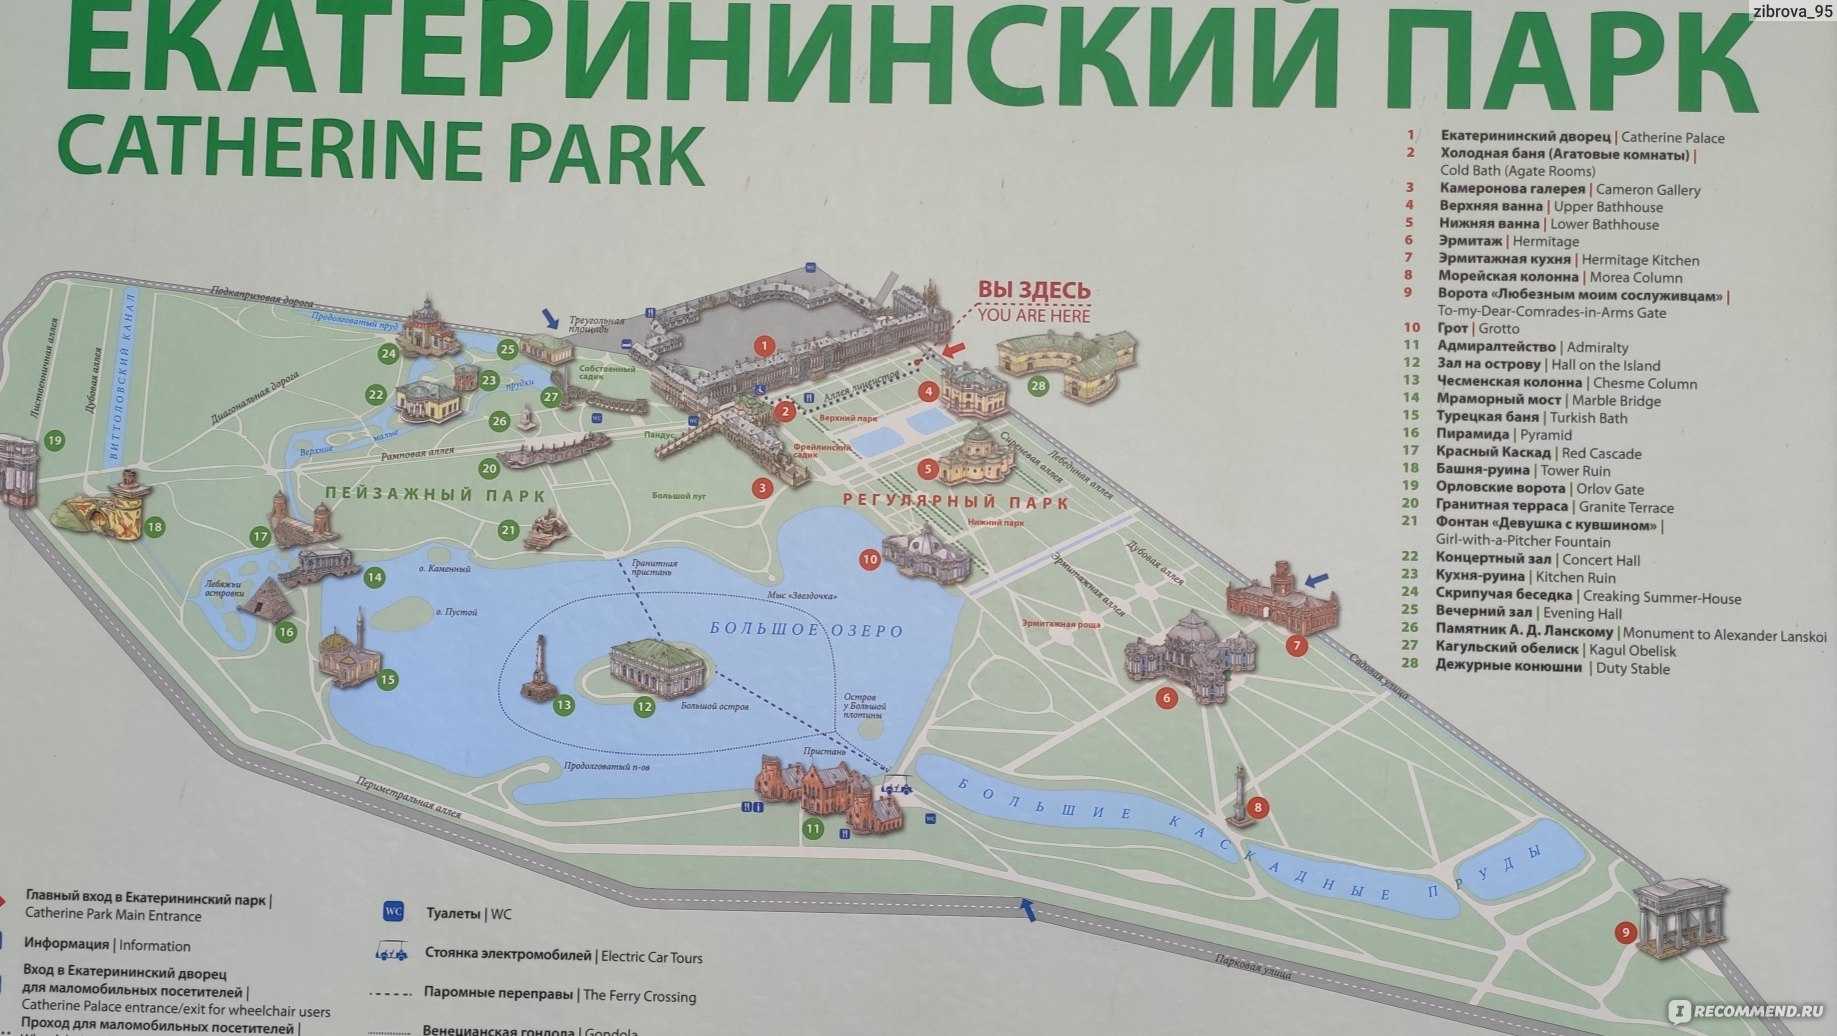 Екатерининский сад в городе пушкин • все о туризме